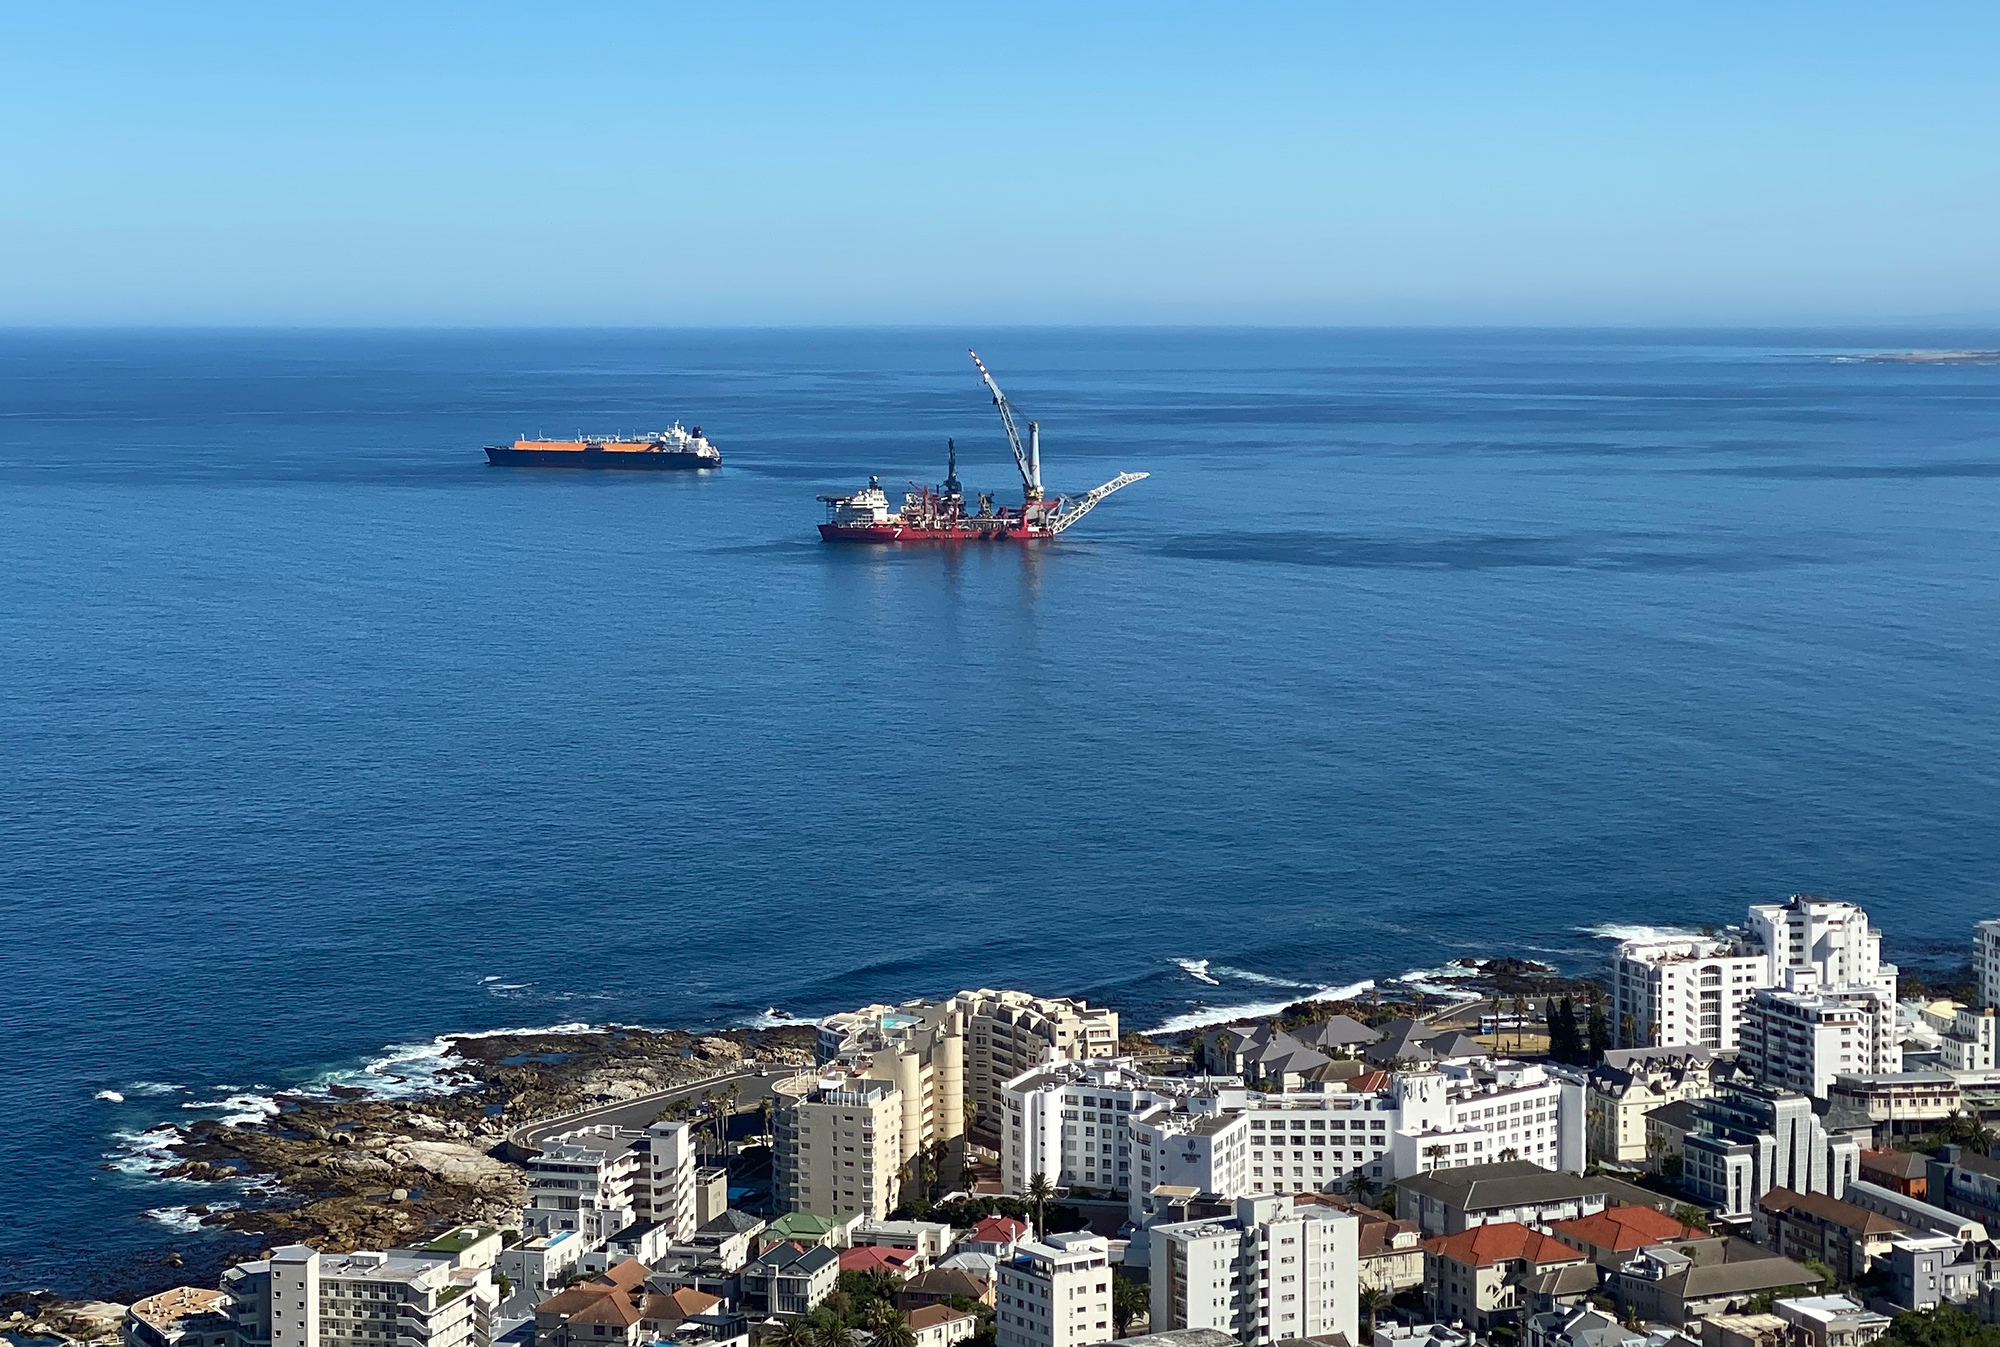 January 2021: The Seven Borealis in operation outside Cape Town. Photo: Michael Kovensky.